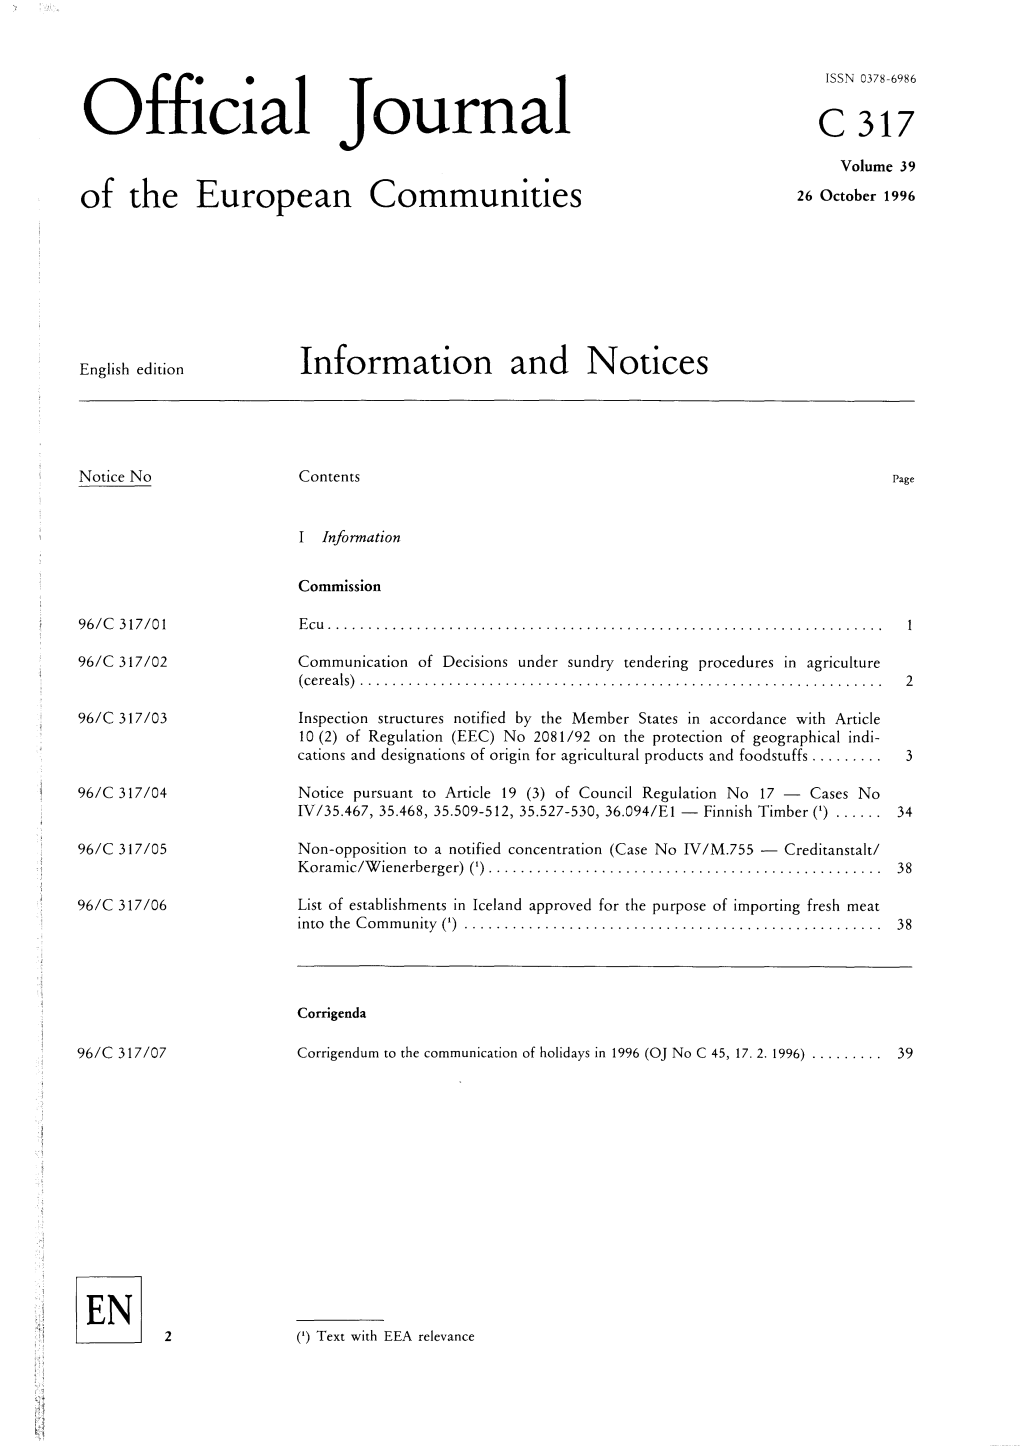 Official Journal C 317 Volume 39 of the European Communities 26 October 1996